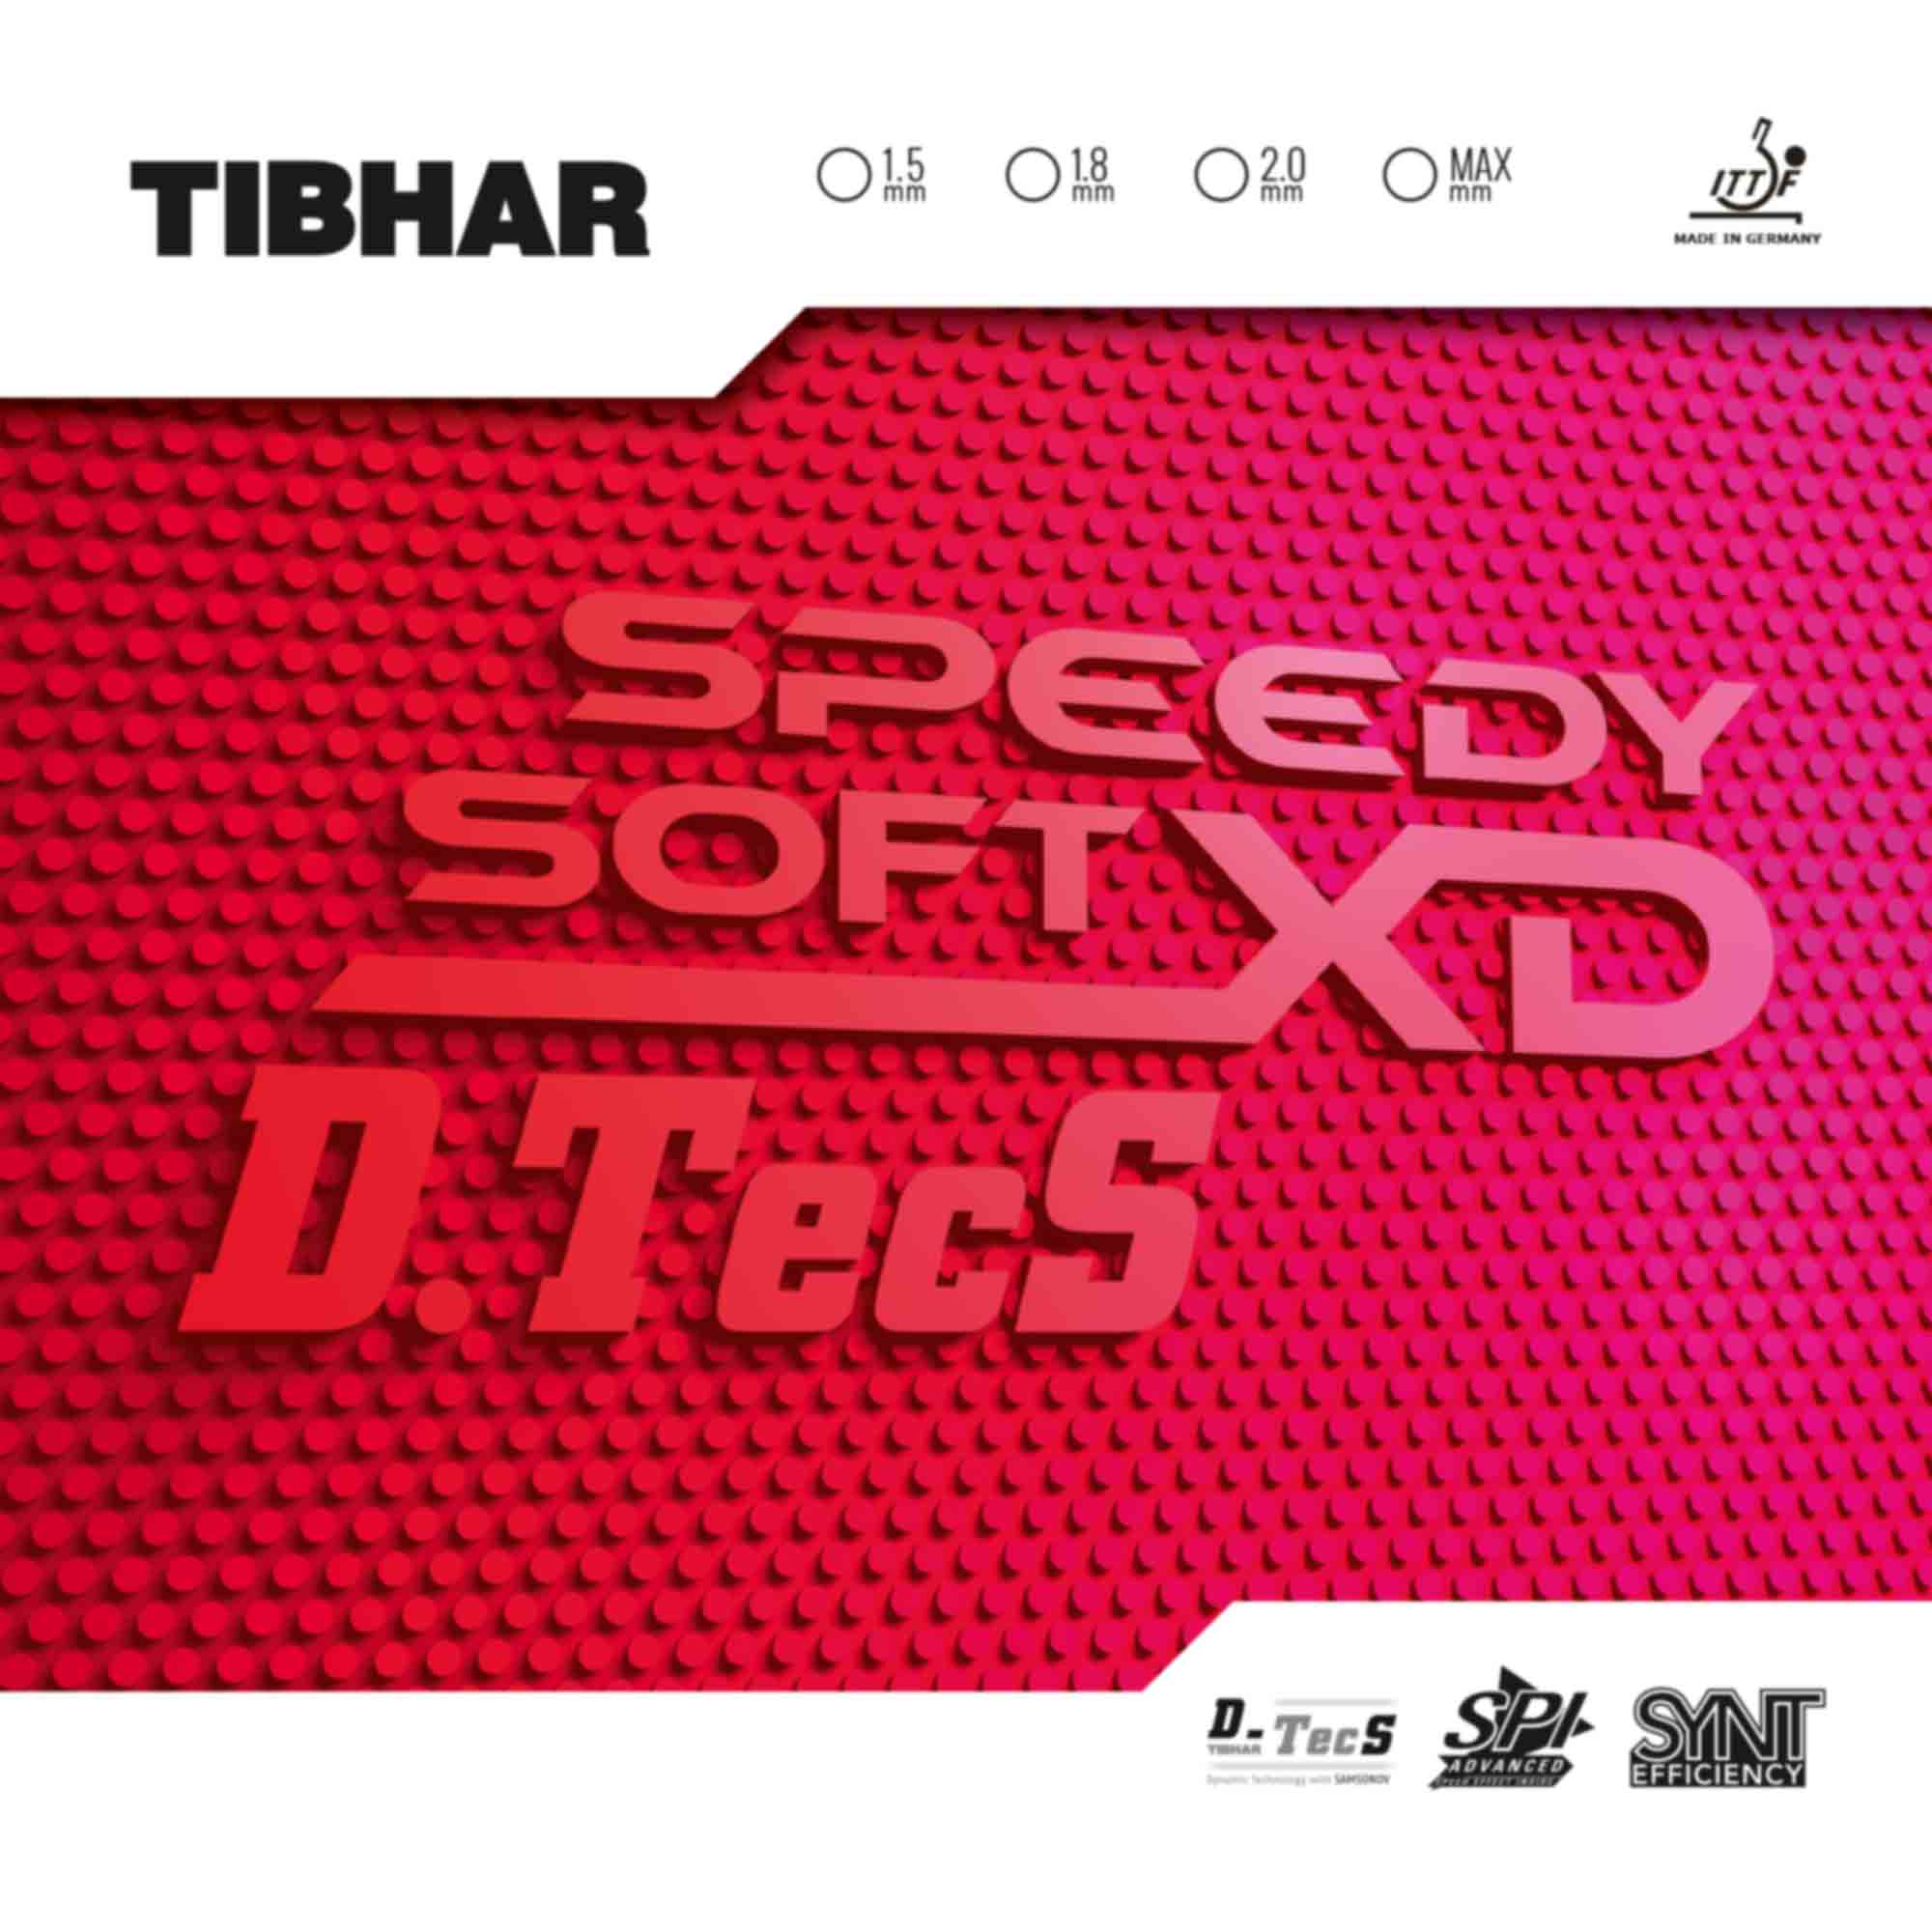 TIBHAR Belag Speedy Soft XD D.Tecs rot 1,5 mm